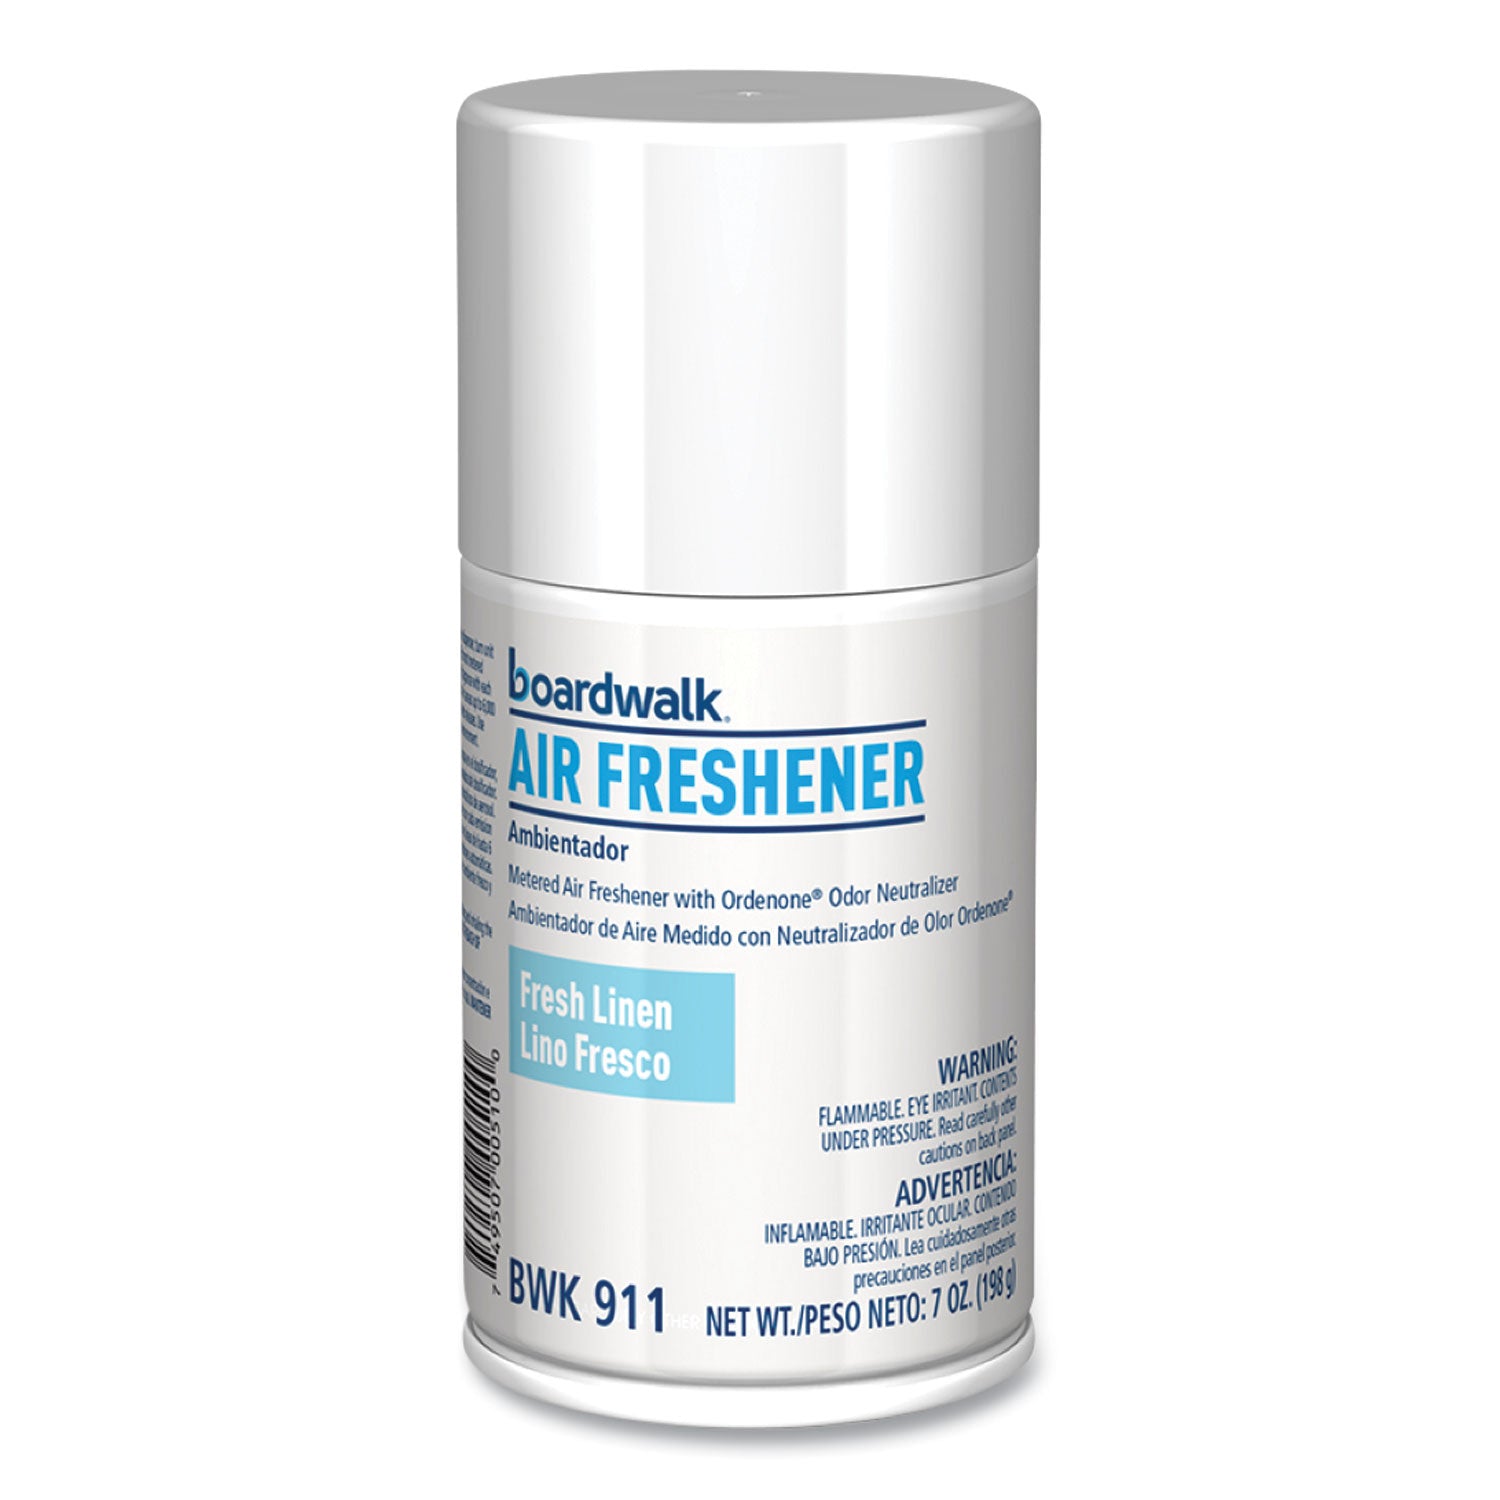 metered-air-freshener-refill-fresh-linen-scent-refill-7-oz-aerosol-can-12-carton_bwk911 - 4